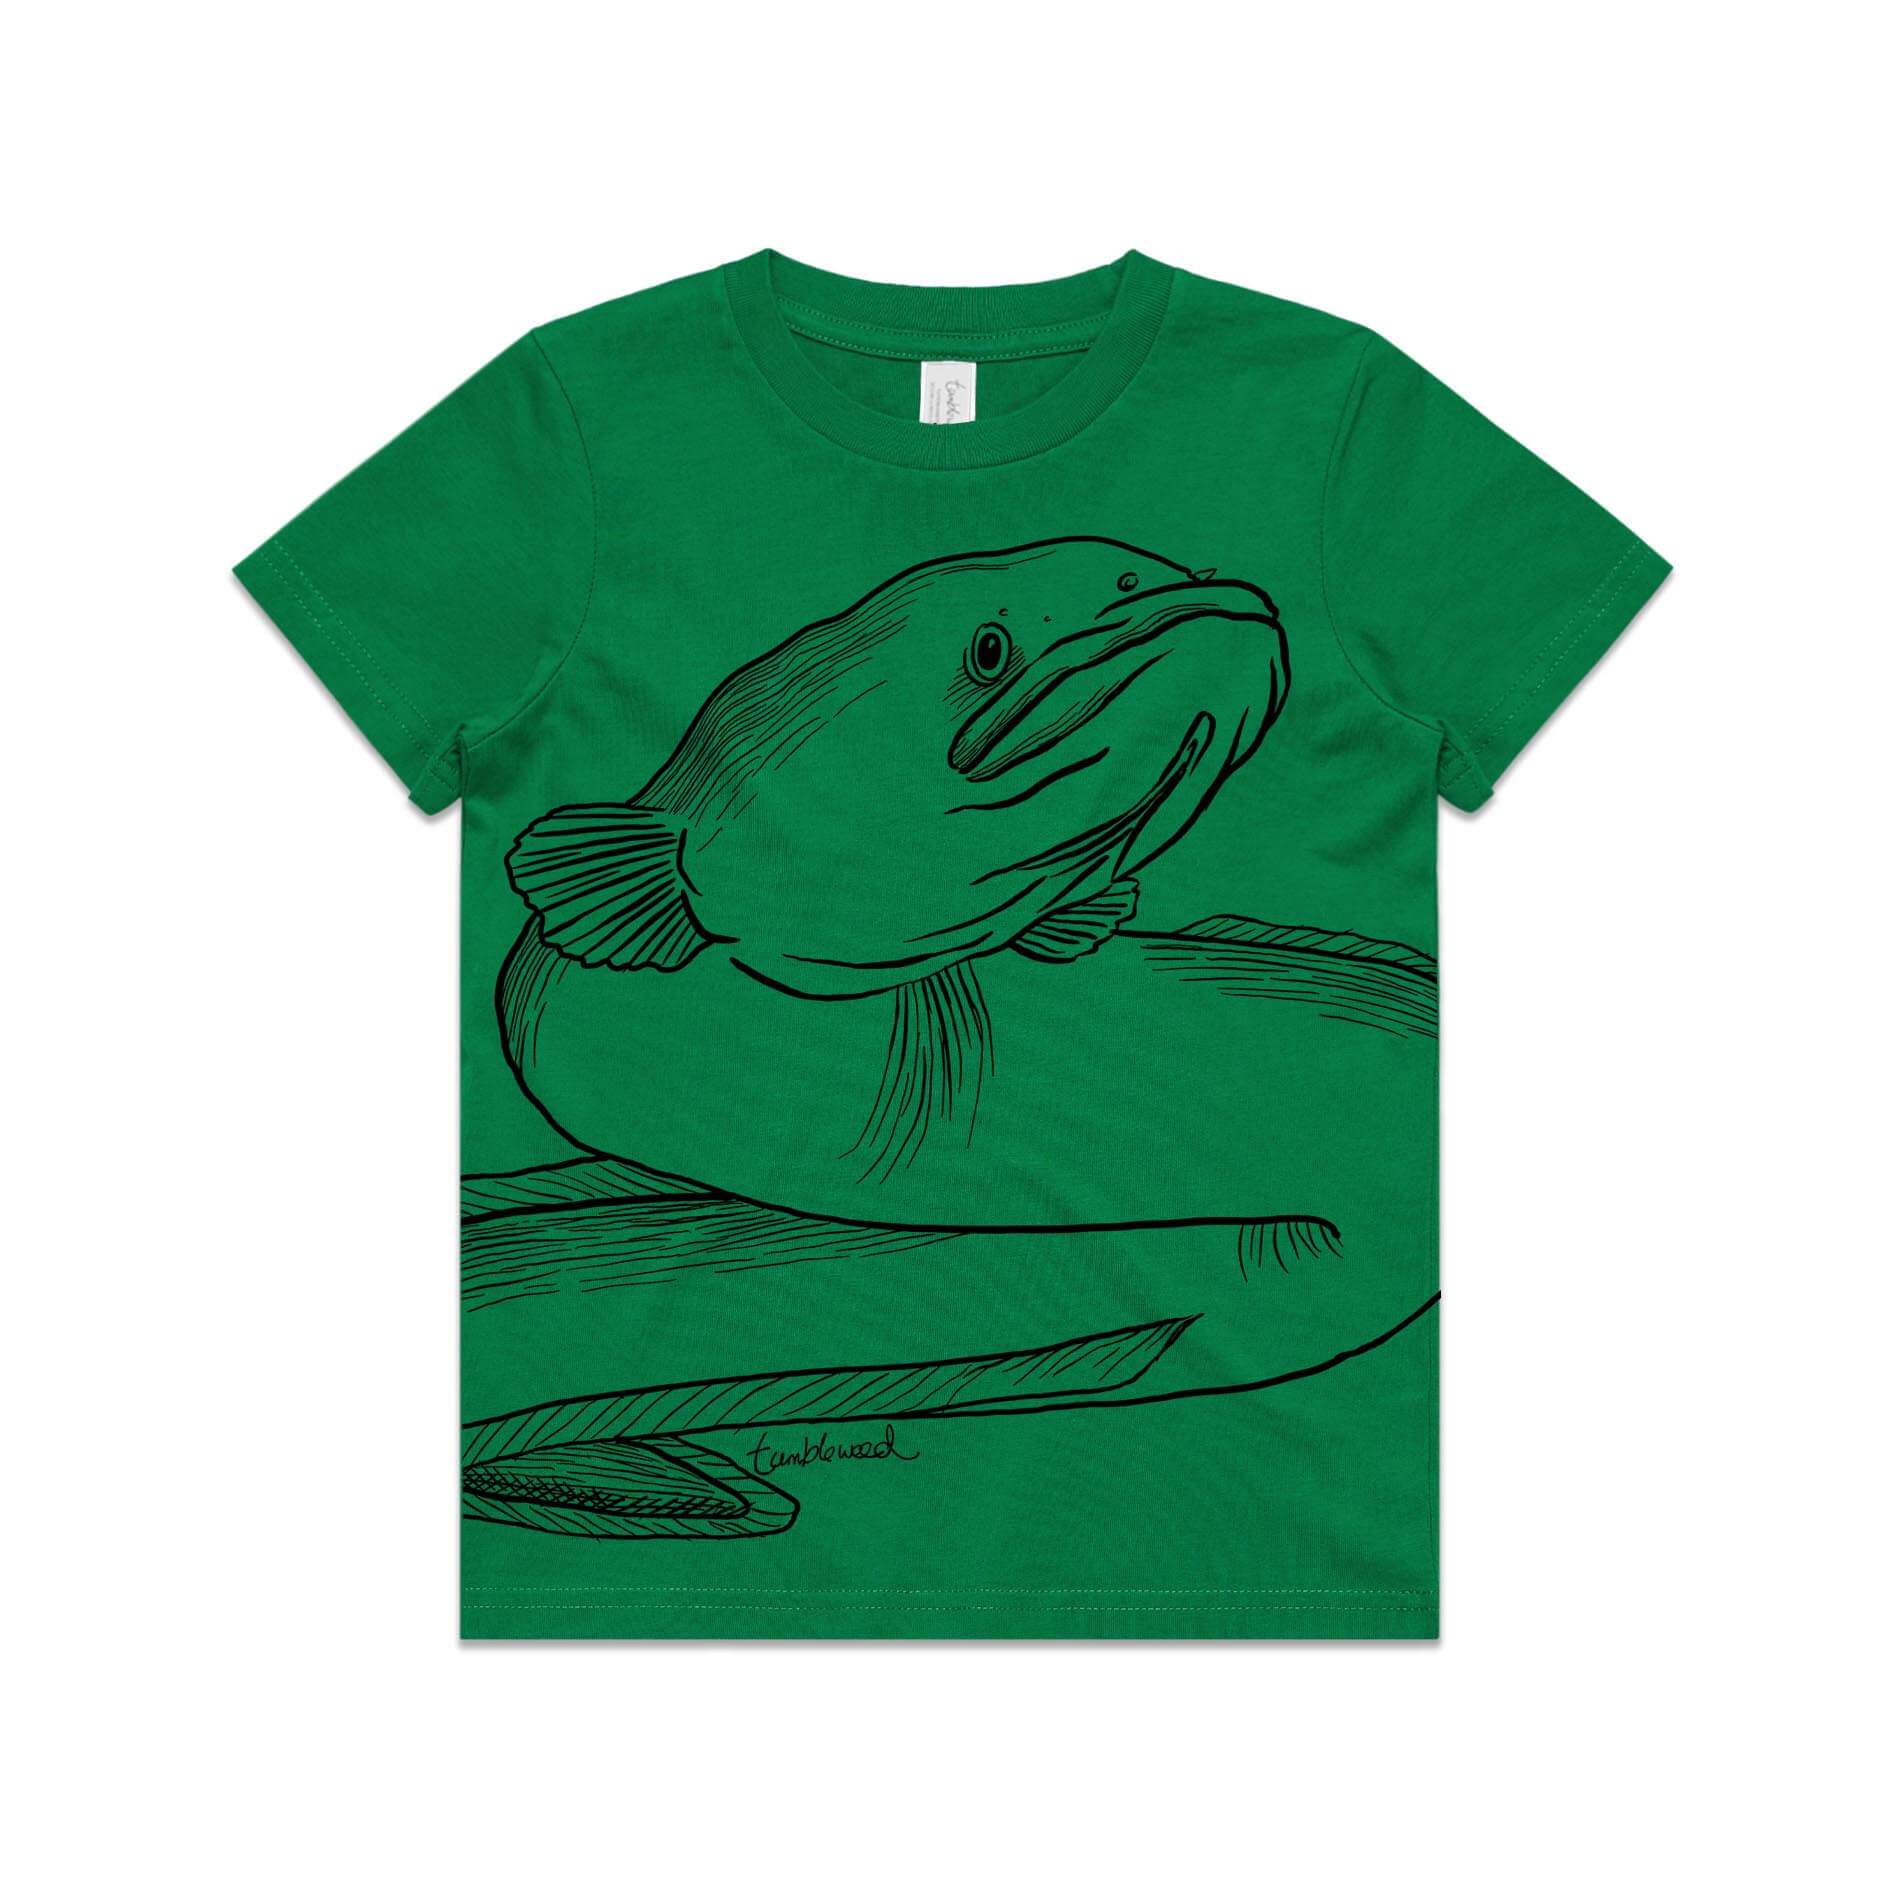 Green, cotton kids' t-shirt with screen printed Long fin eel/tuna design.